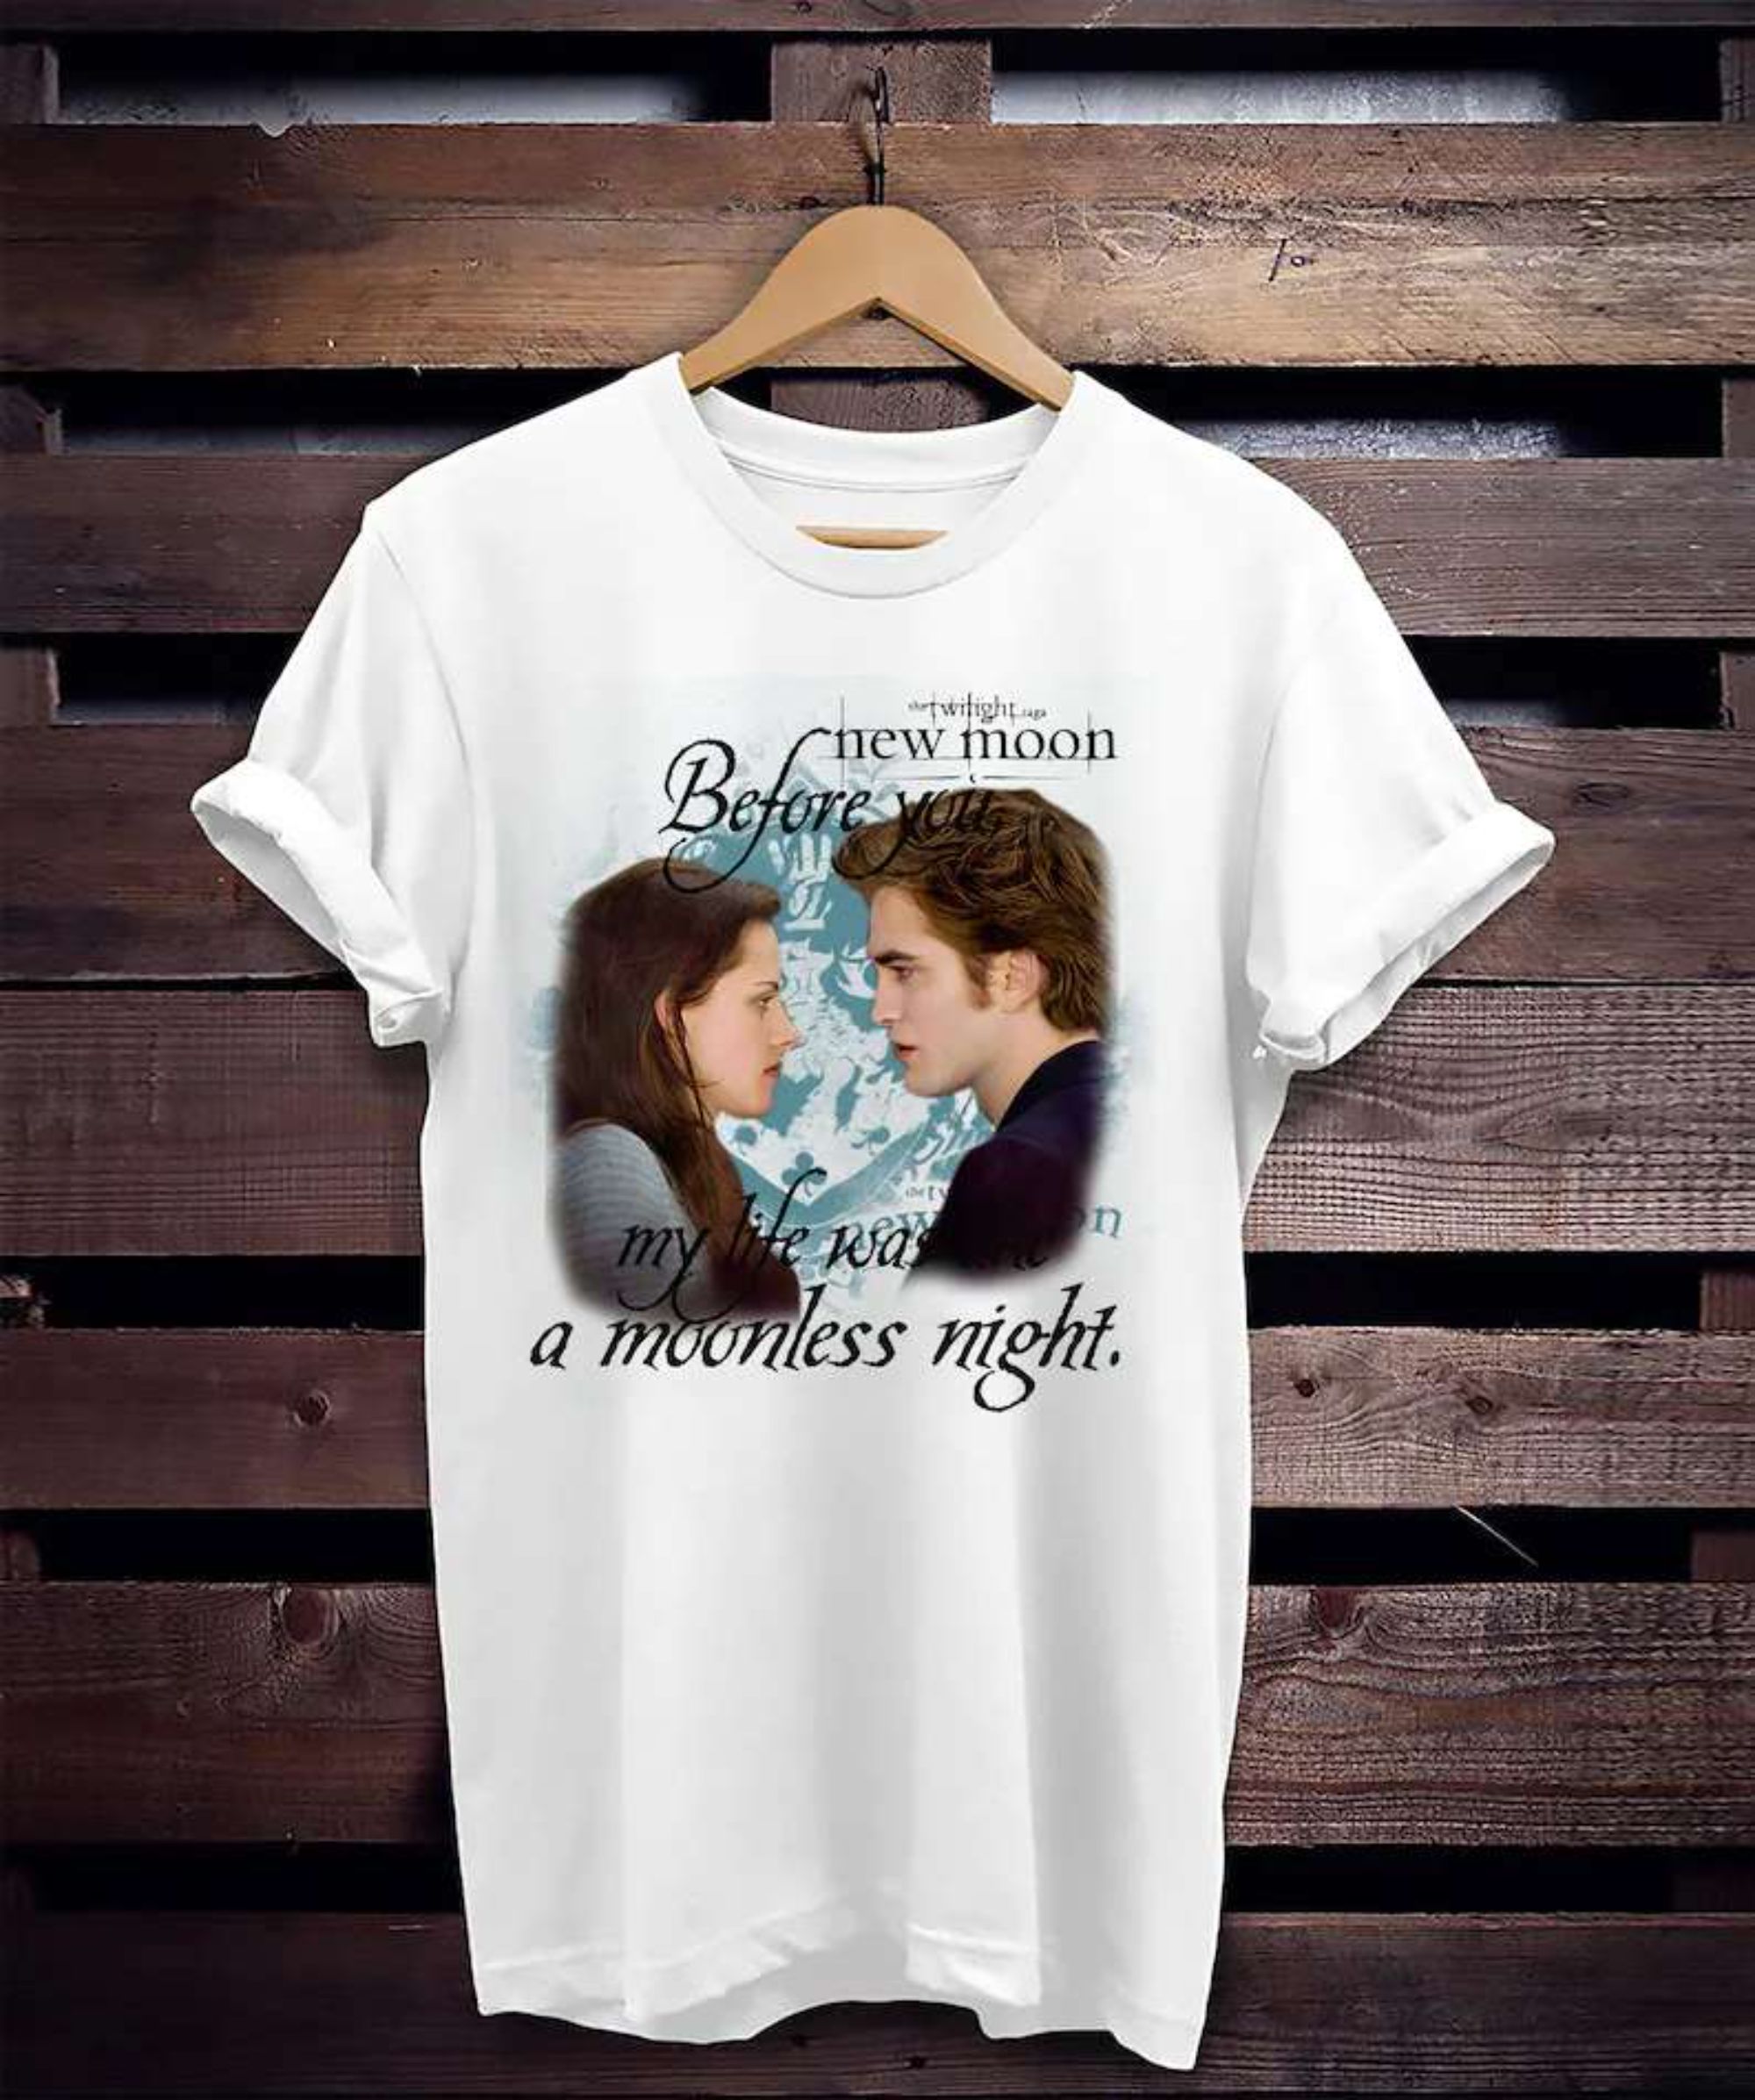 Edward Cullen T Shirt - Twilight